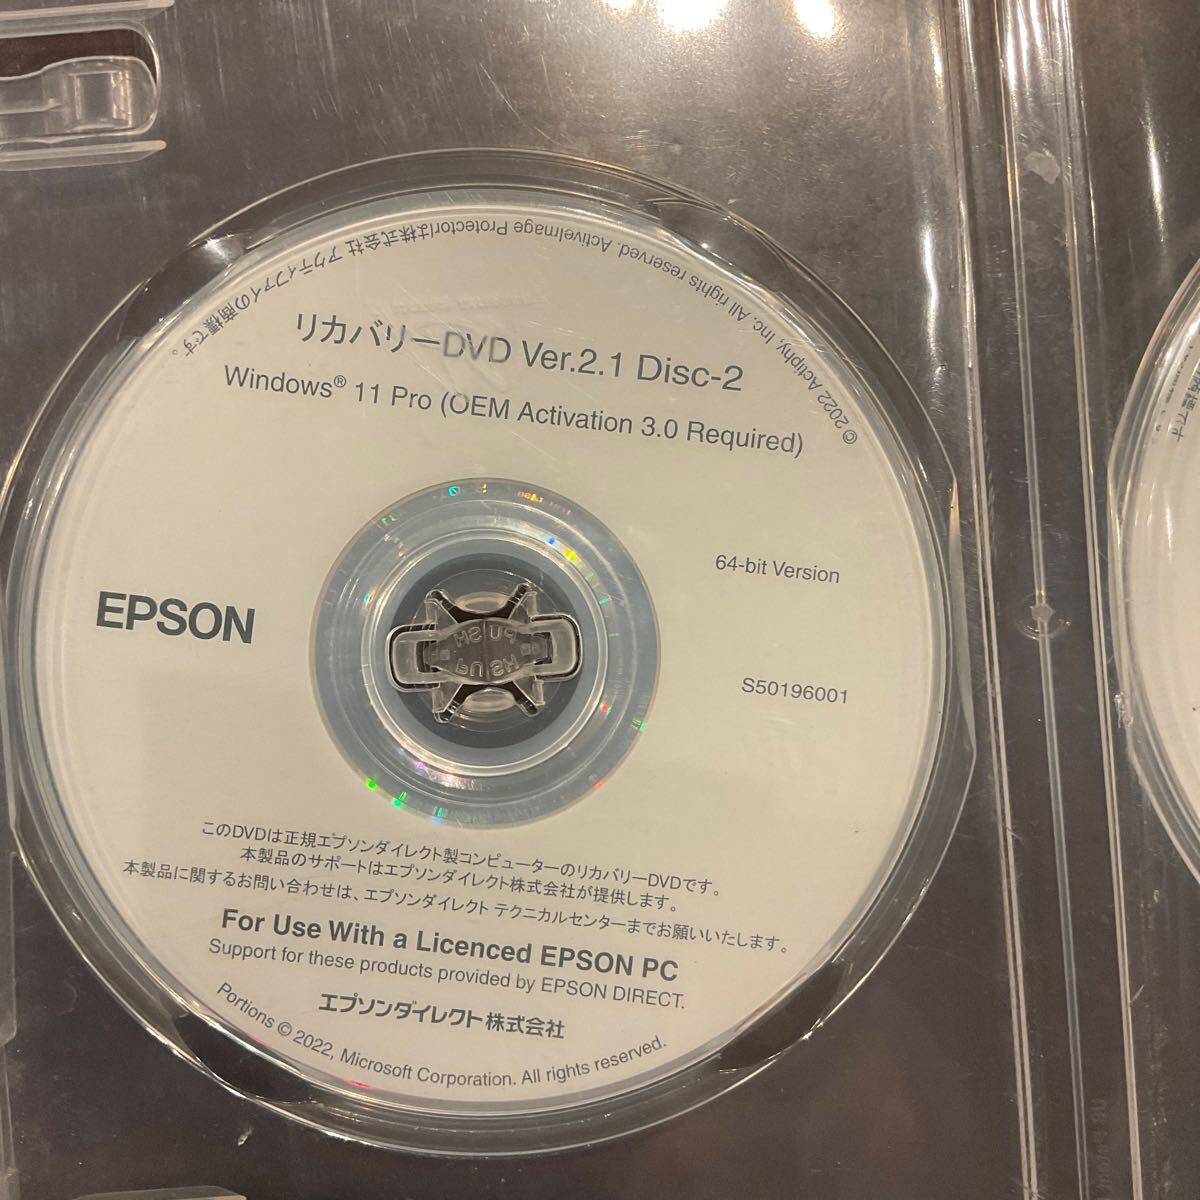 ◎(E4061)中古品 EPSON リカバリ一DVD Ver.2.1 Windows 11 Pro (OEM Activation3.0 Required) 64-bit Version 2枚セット_画像3